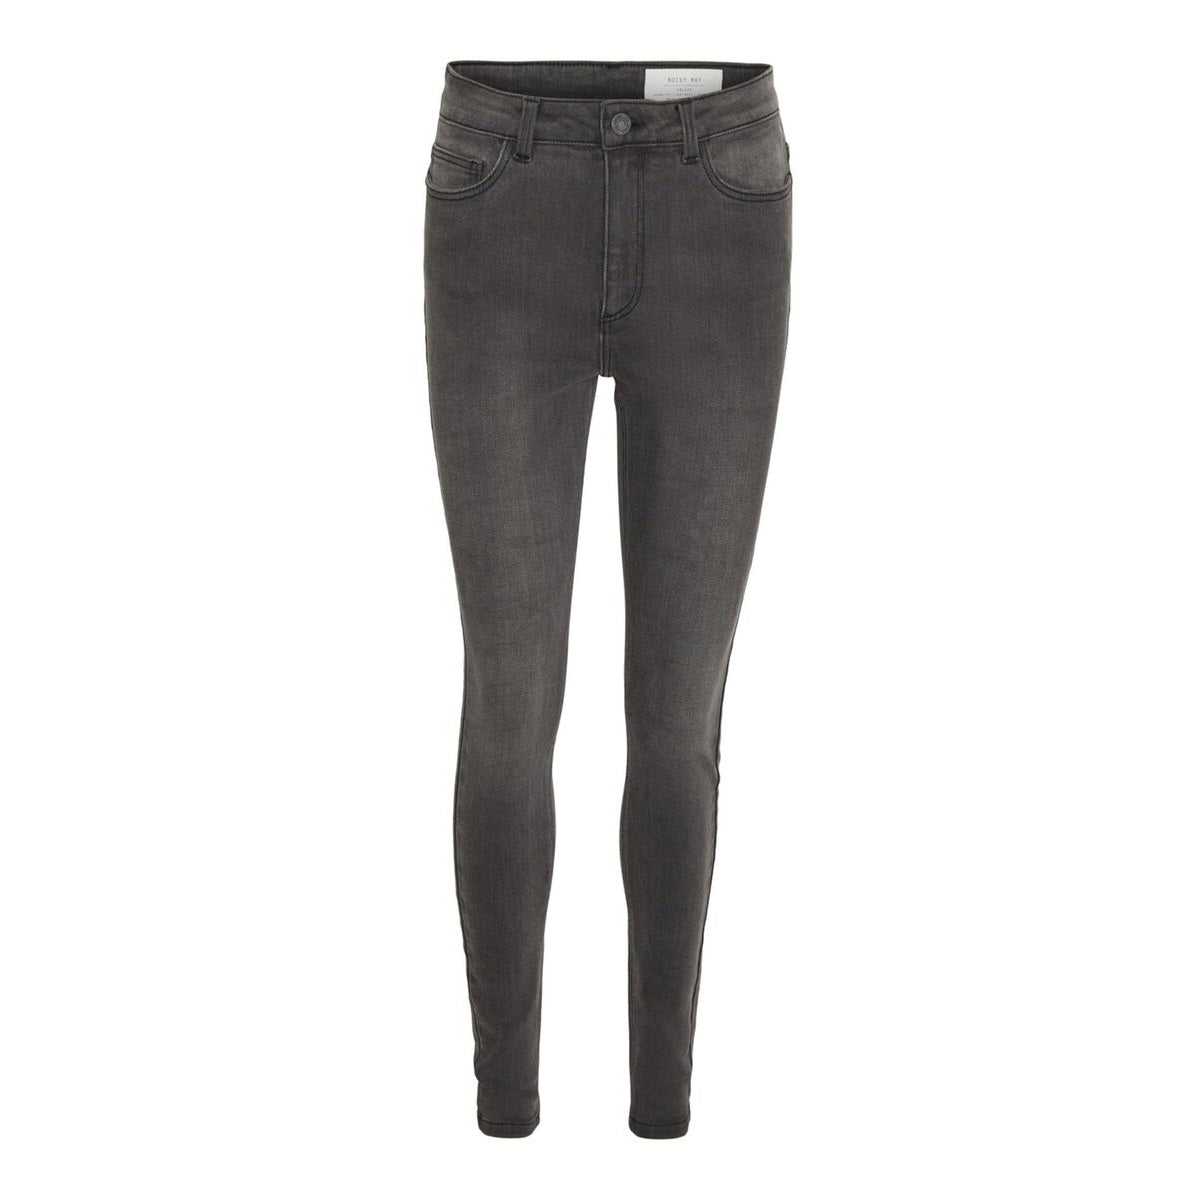 Callie Skinny Jeans - Dark Grey - for kvinde - NOISY MAY - Jeans